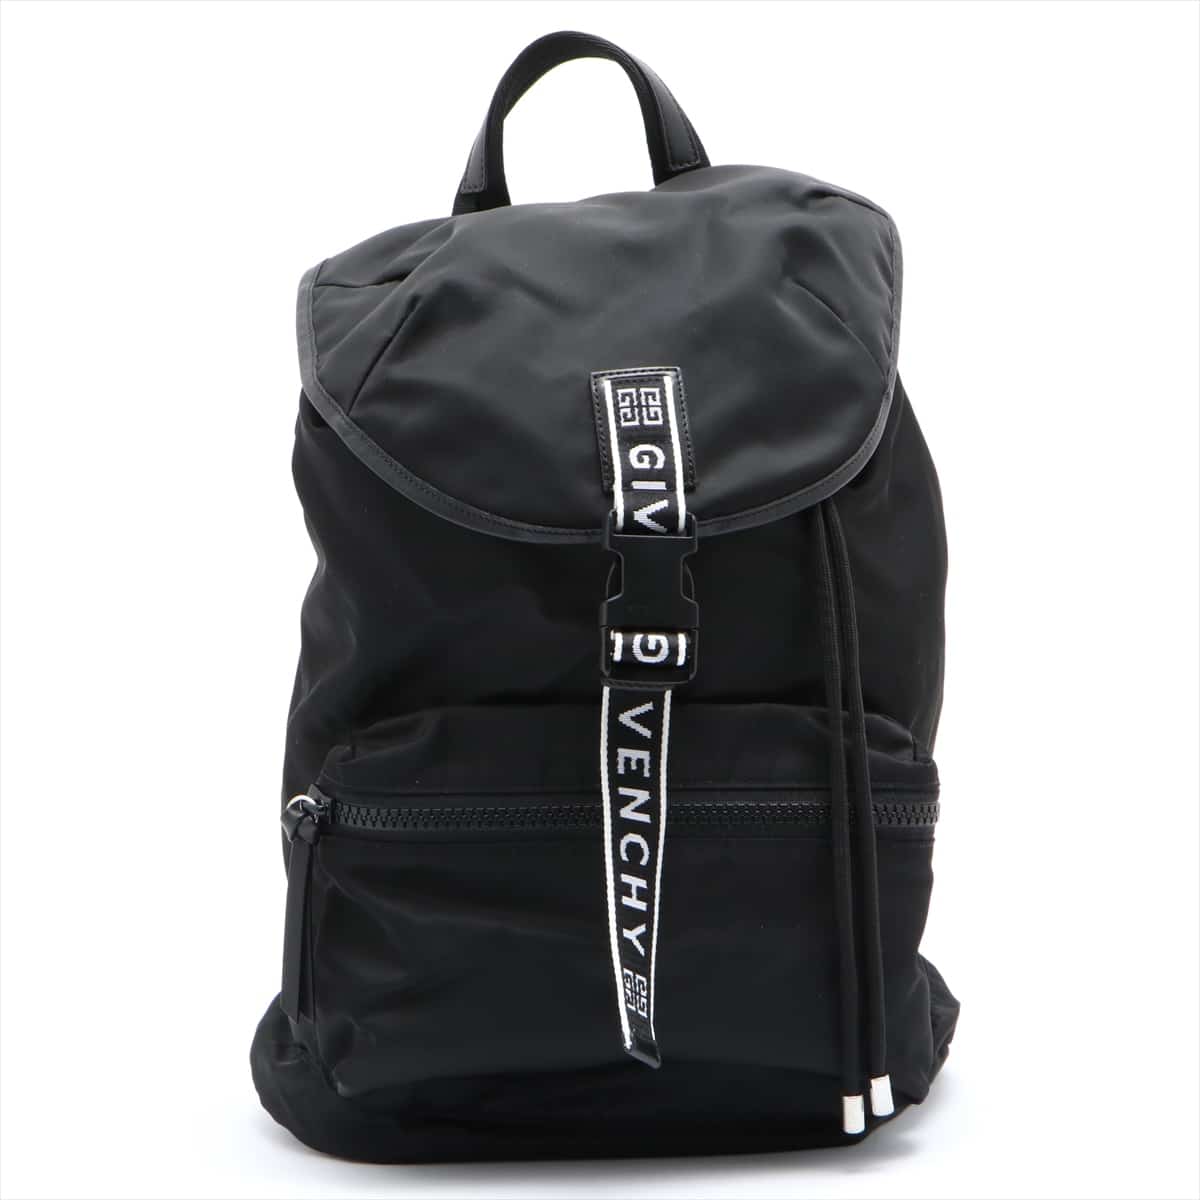 Givenchy Nylon & Leather Backpack Black